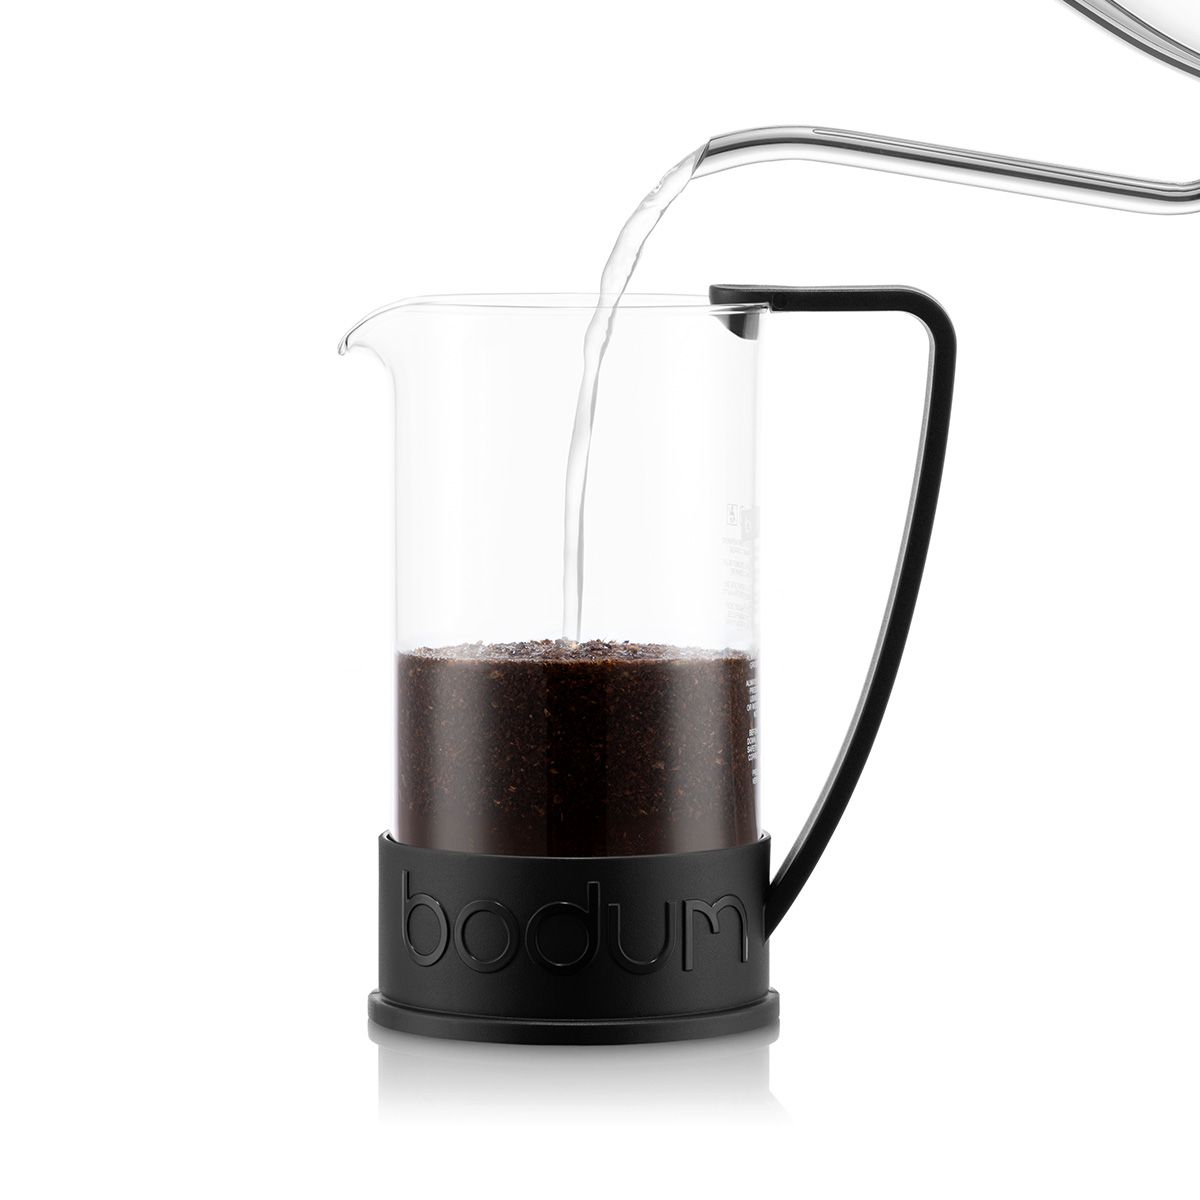 NEW Bodum BRAZIL Coffee Maker French Press Coffee Maker Black 51 Ounce 12 Cup 